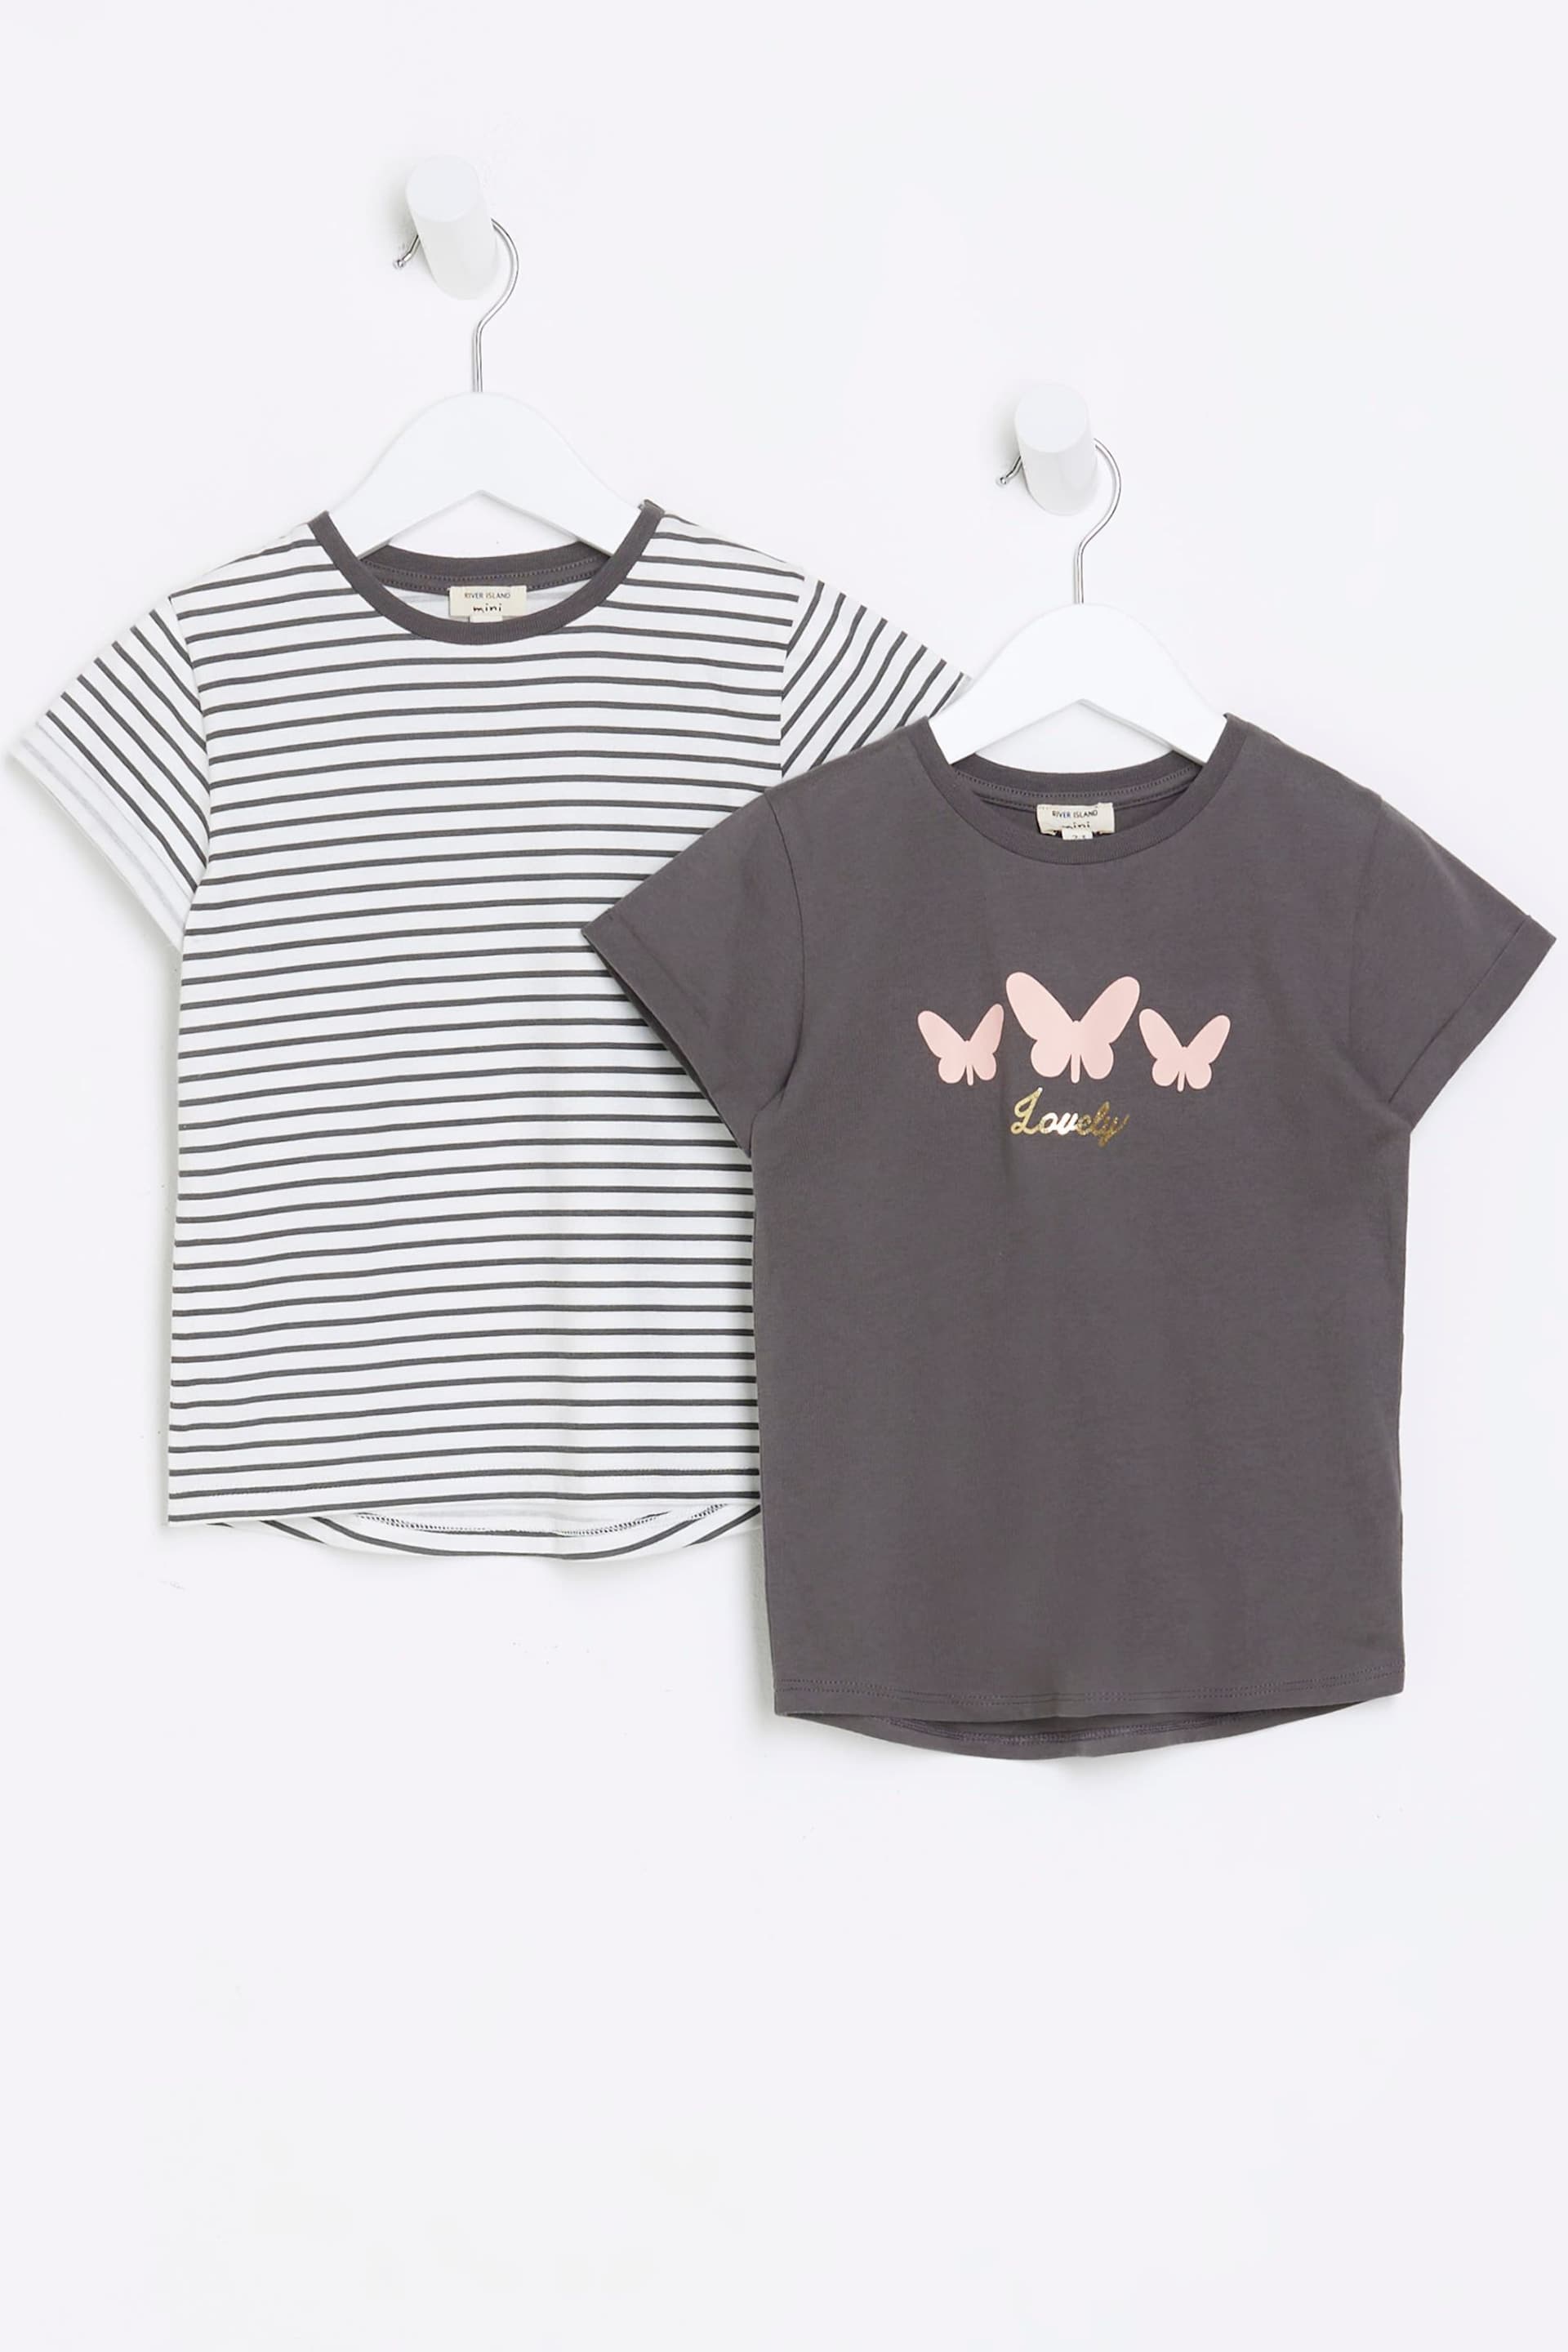 River Island White/Grey Mini Girls Stripe T-Shirts 2 Pack - Image 1 of 4